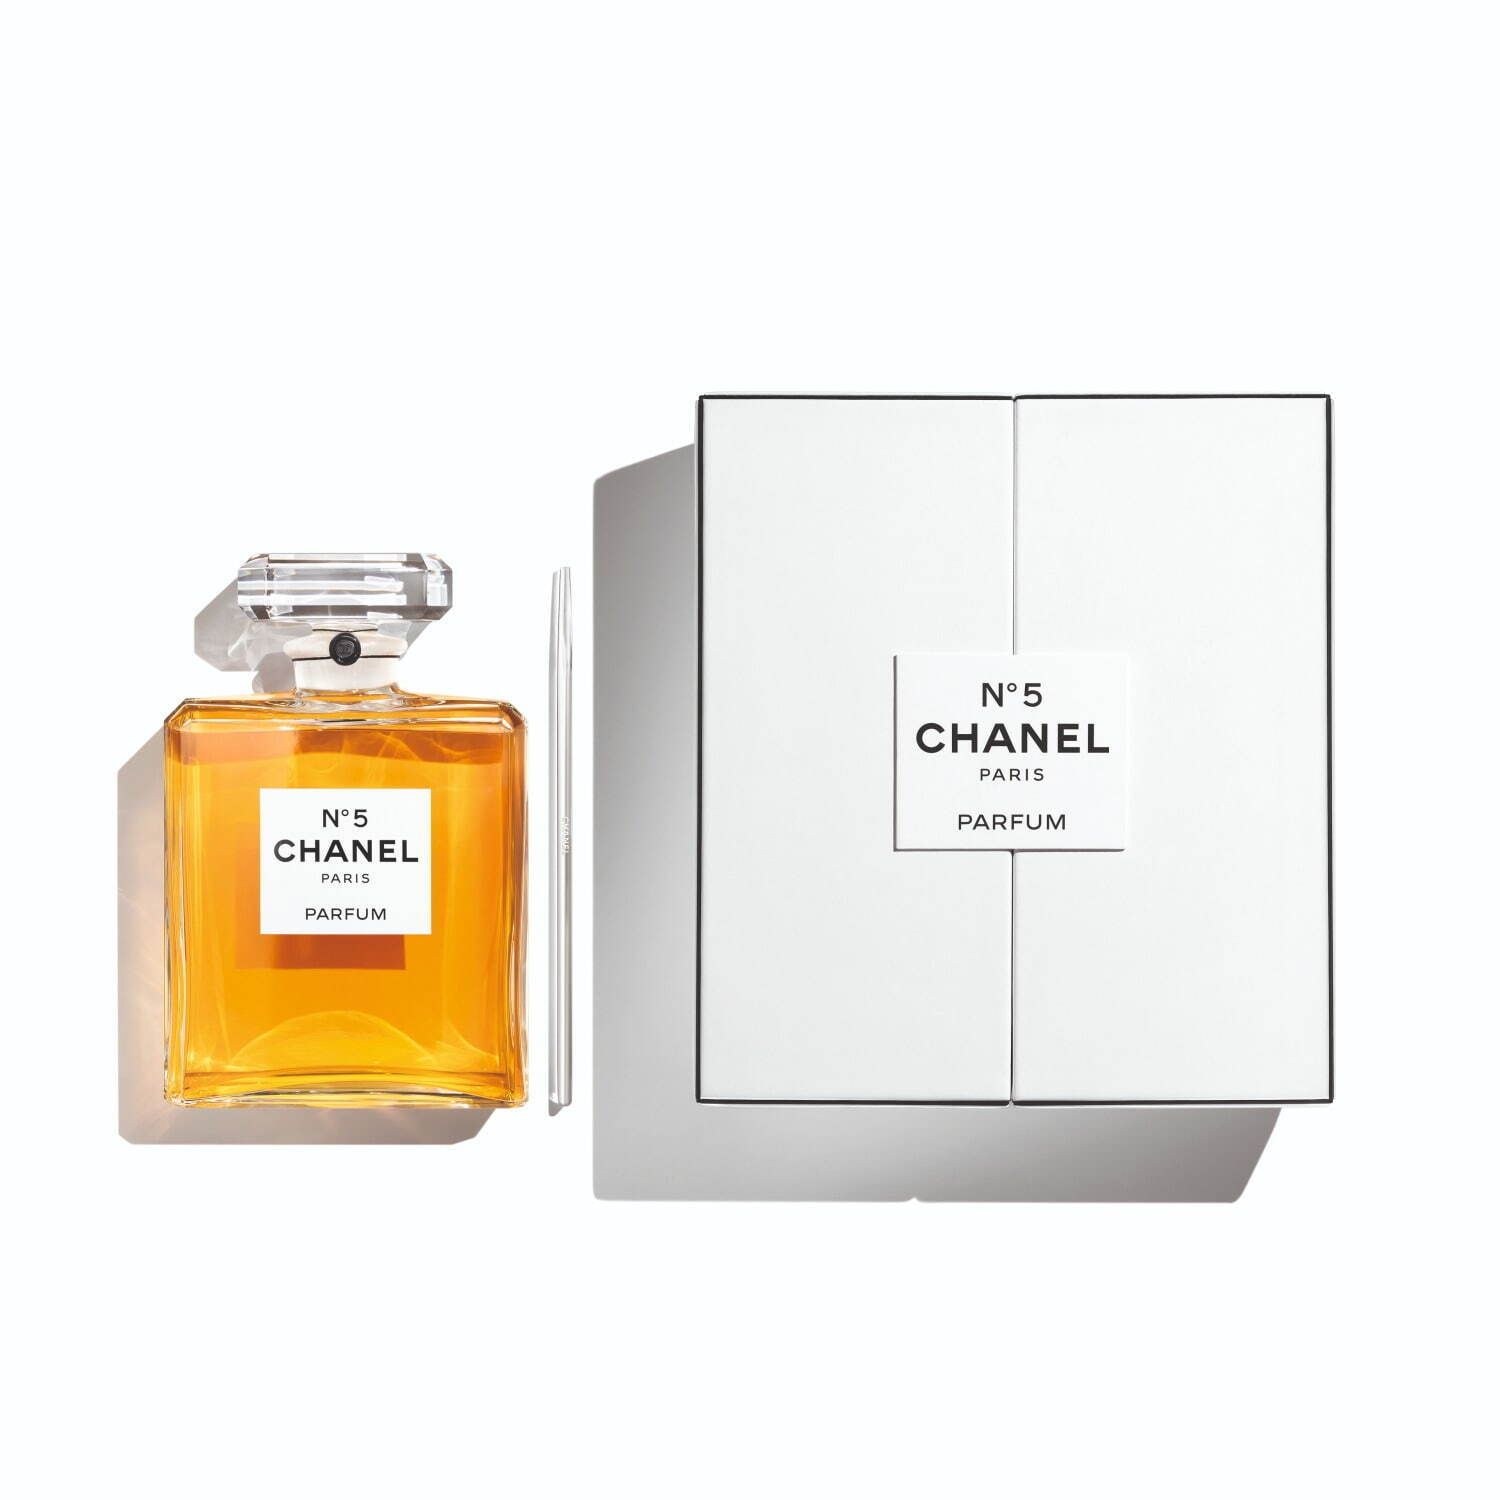 Chanel No 5 Parfum Baccarat Grand Extrait Chanel perfume - a fragrance ...